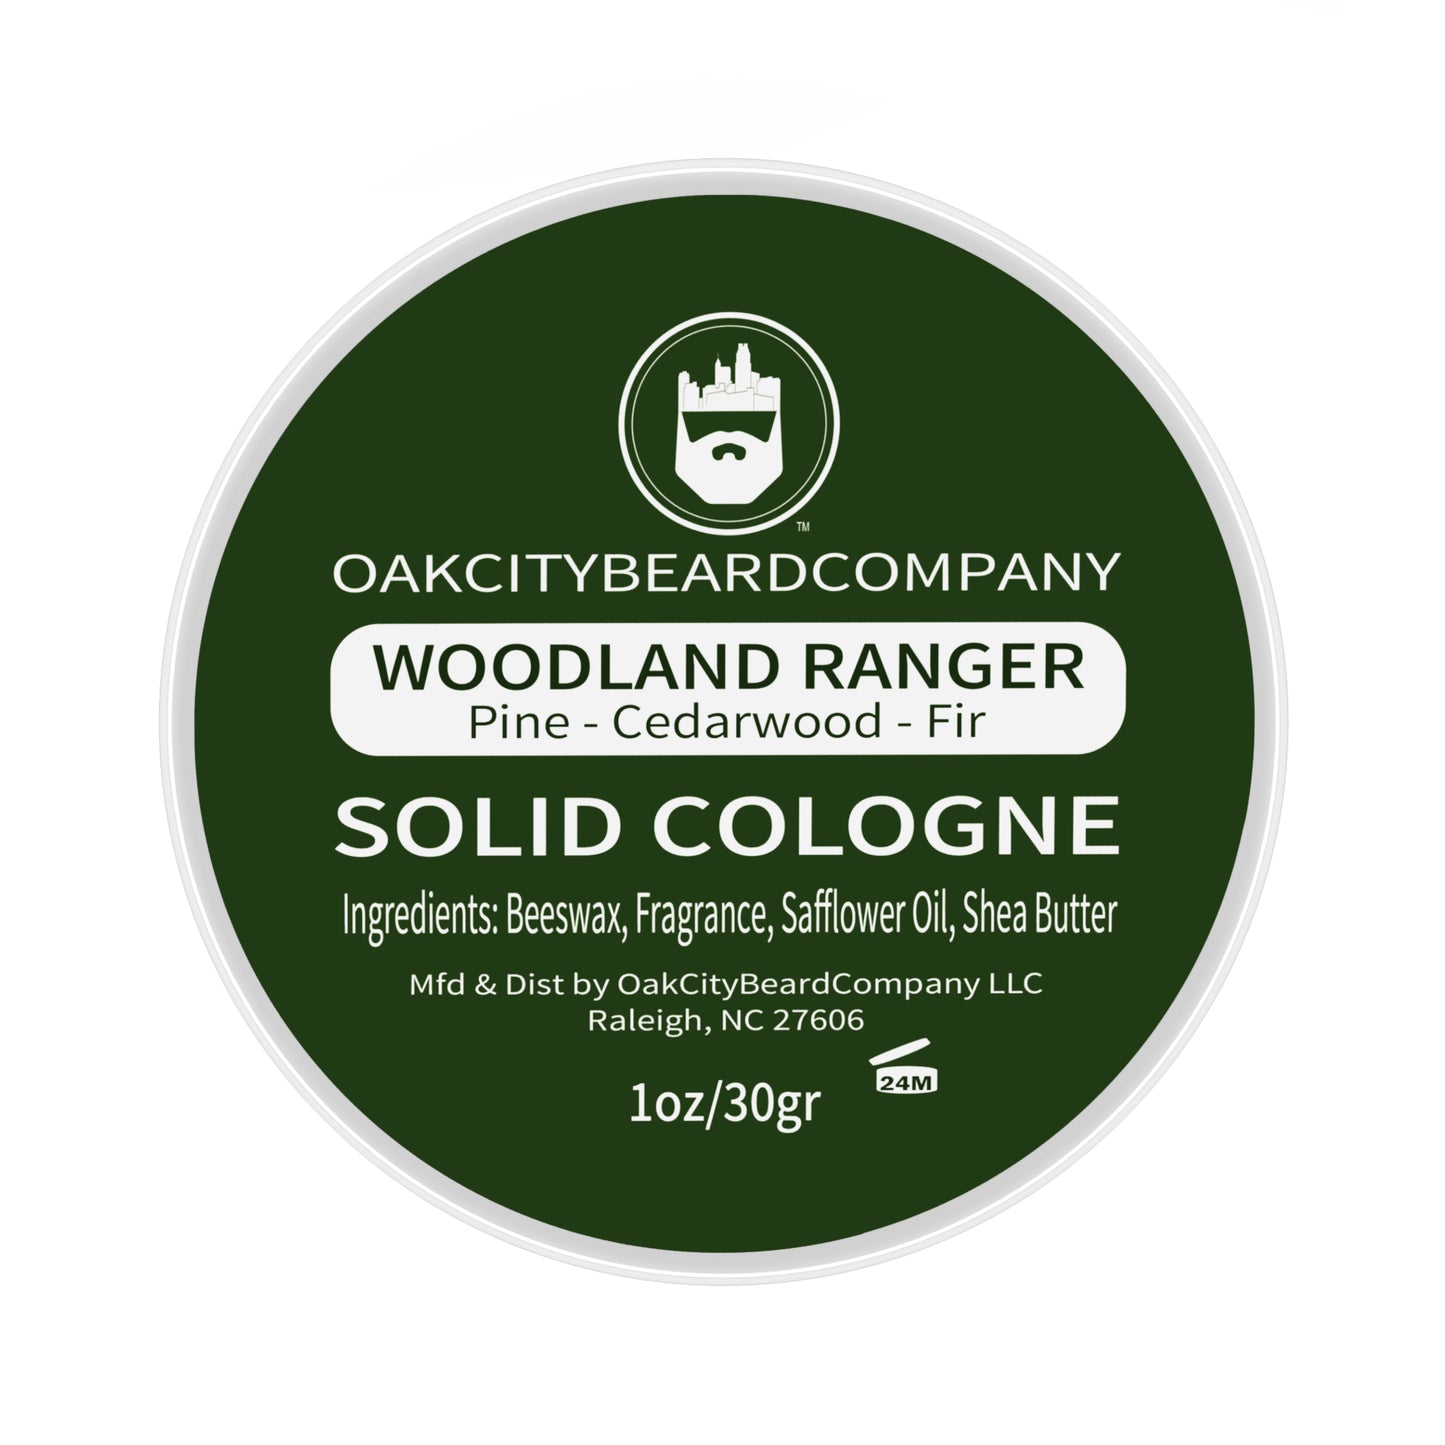 Woodland Ranger (Solid Cologne) by Oak City Beard Company